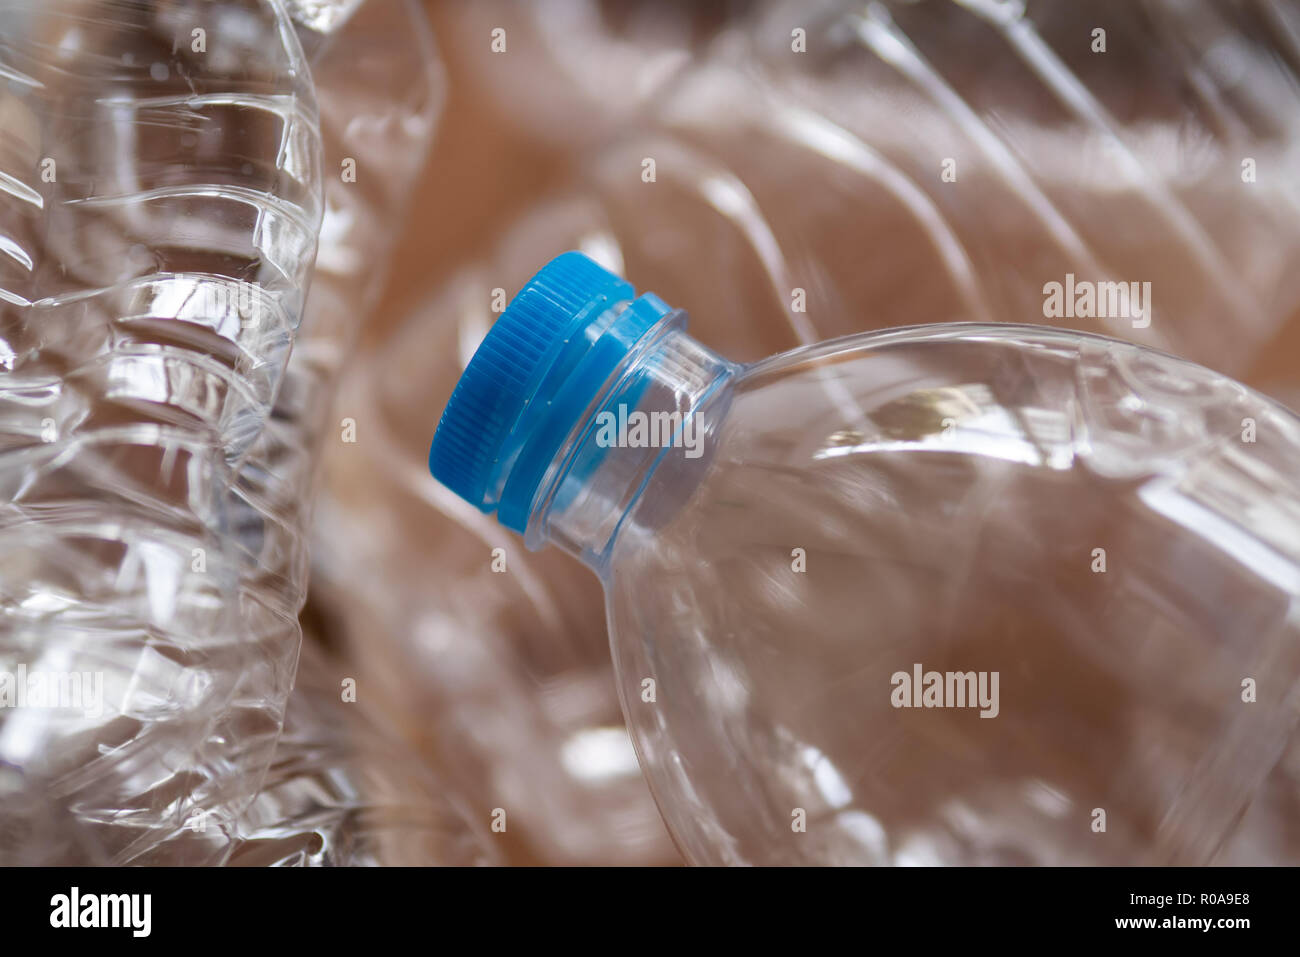 Used plastic bottles in recycle bin Stock Photo